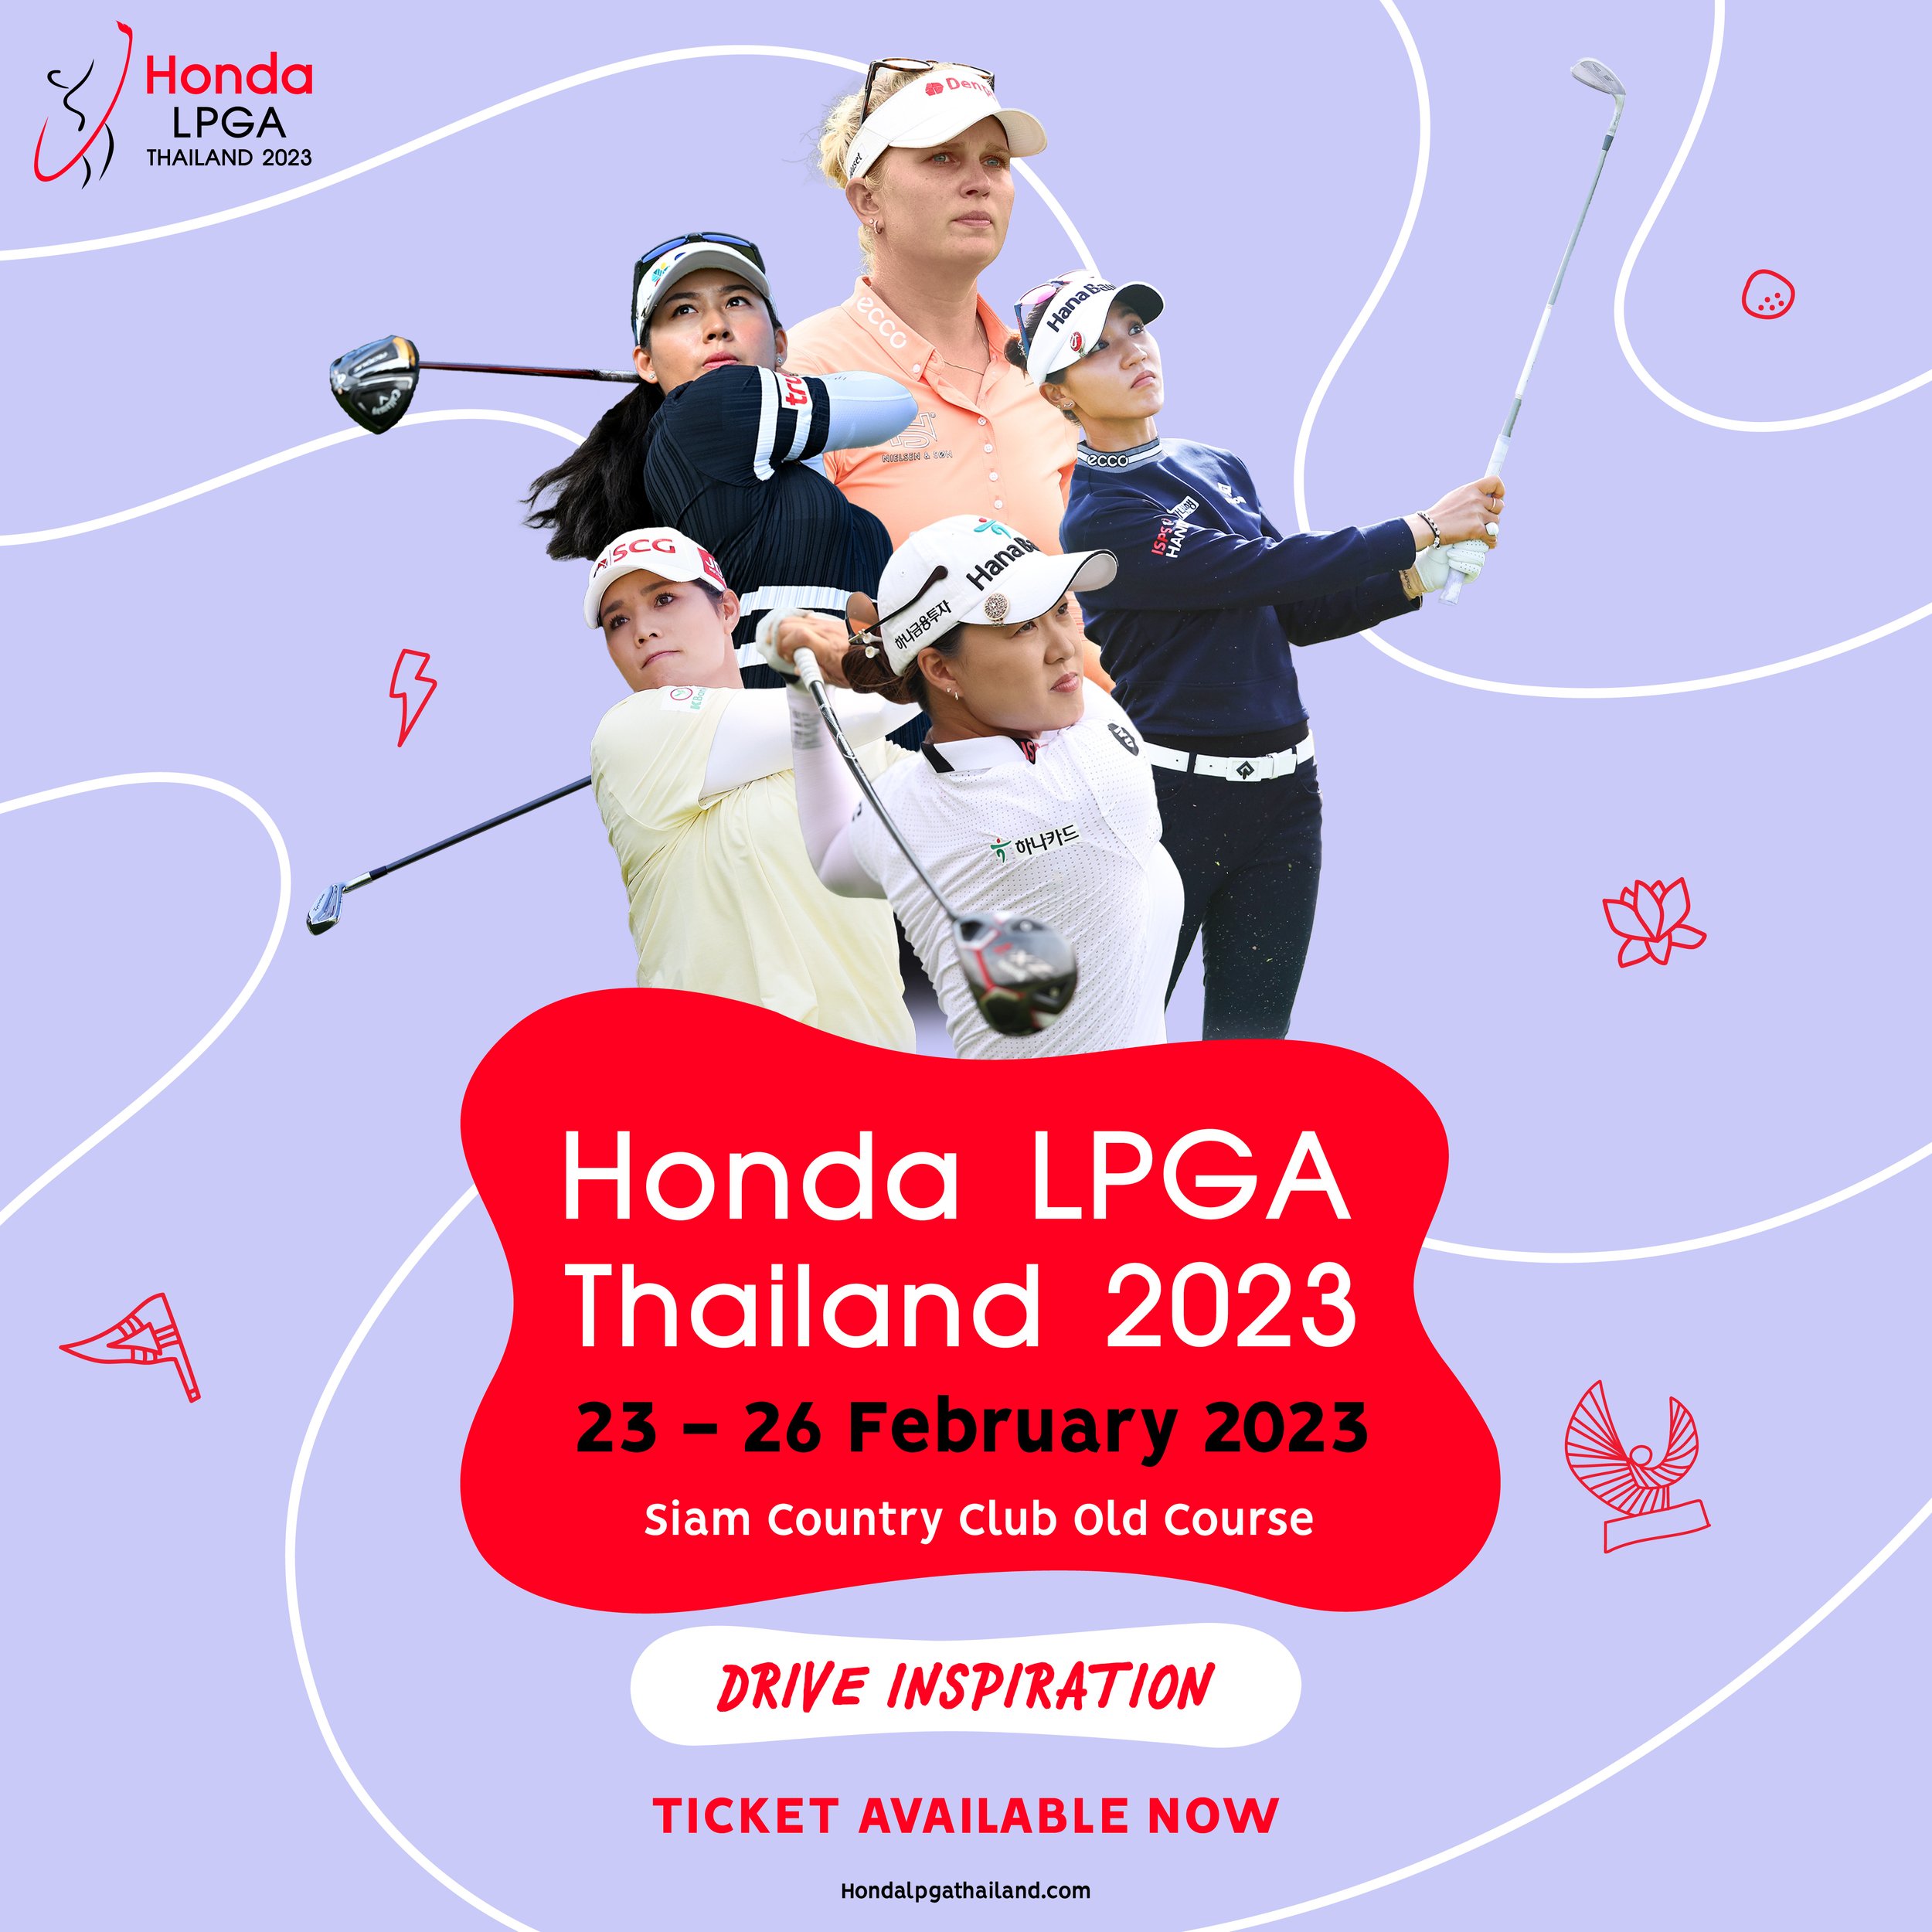 Honda LPGA Thailand 2023 ศึกประชันวงสวิงระดับโลก — The Golf Times